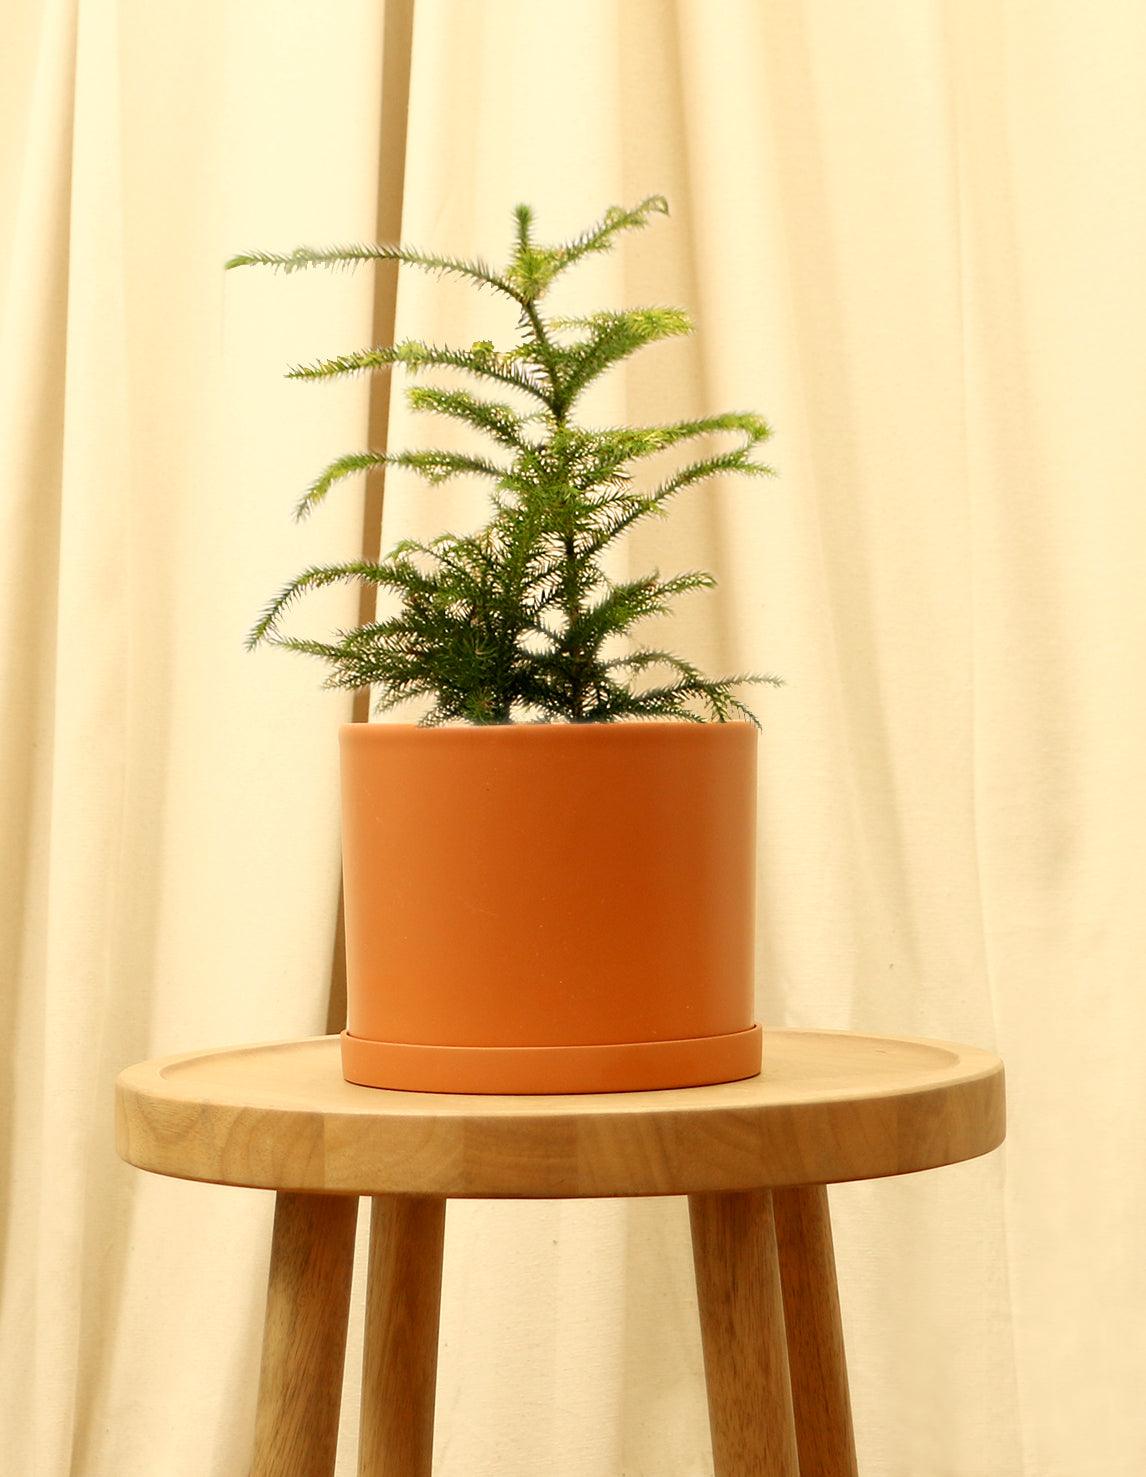 Medium Norfolk Island Pine in orange pot.